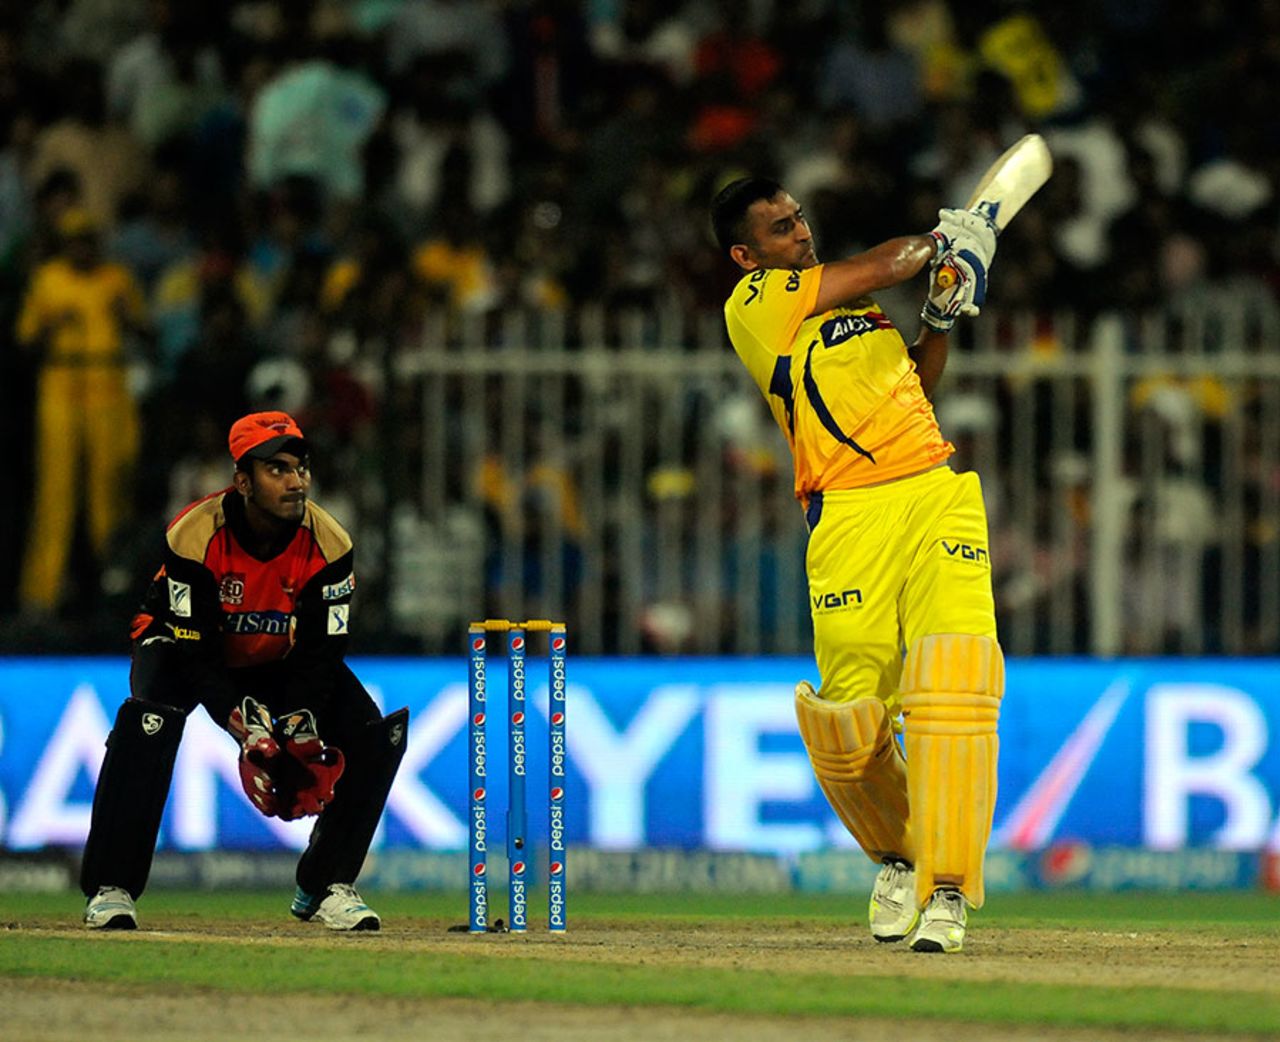 MS Dhoni swats the ball to the leg side, Sunrisers Hyderabad v Chennai Super Kings, IPL 2014, Sharjah, April 27, 2014